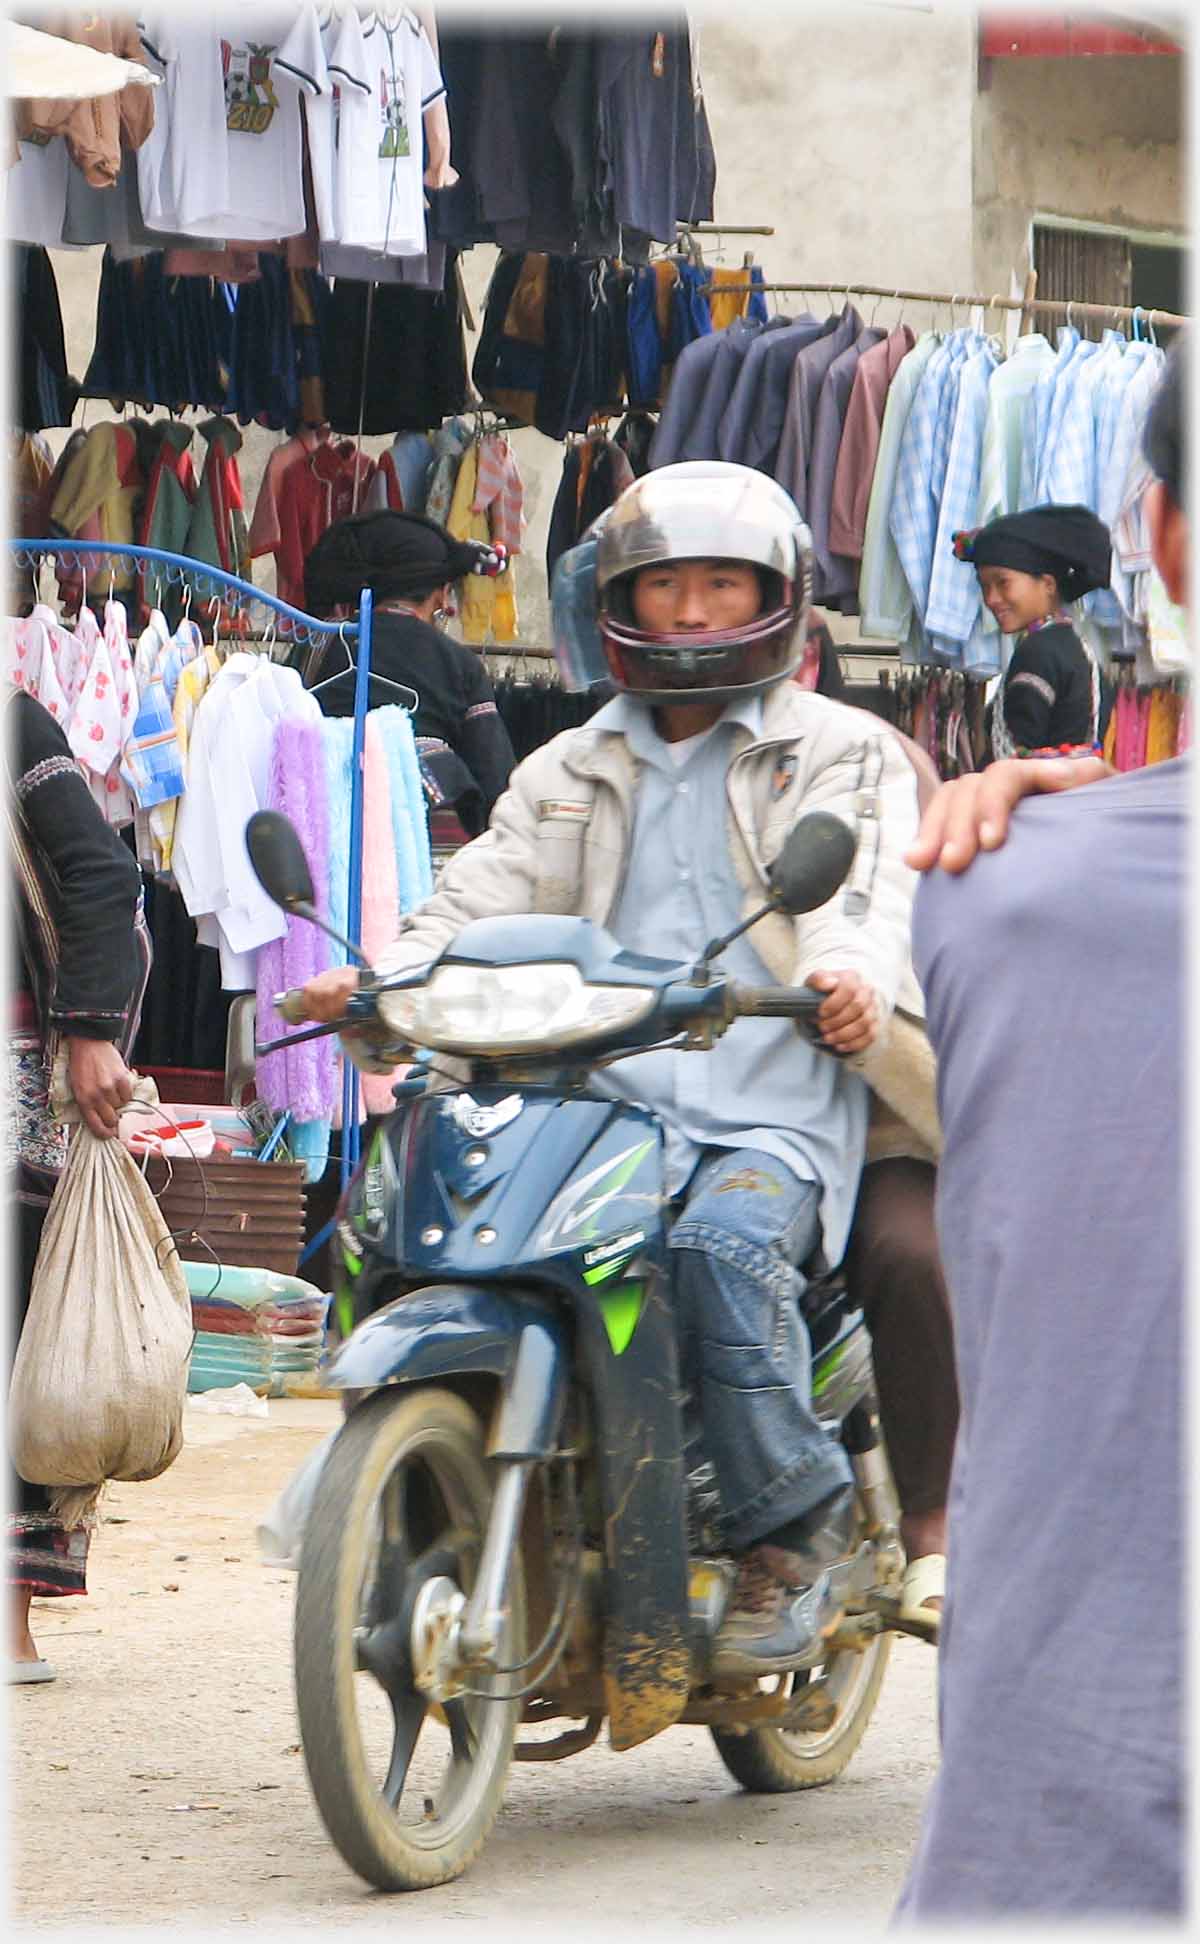 Man on motorbike riding past stalls.